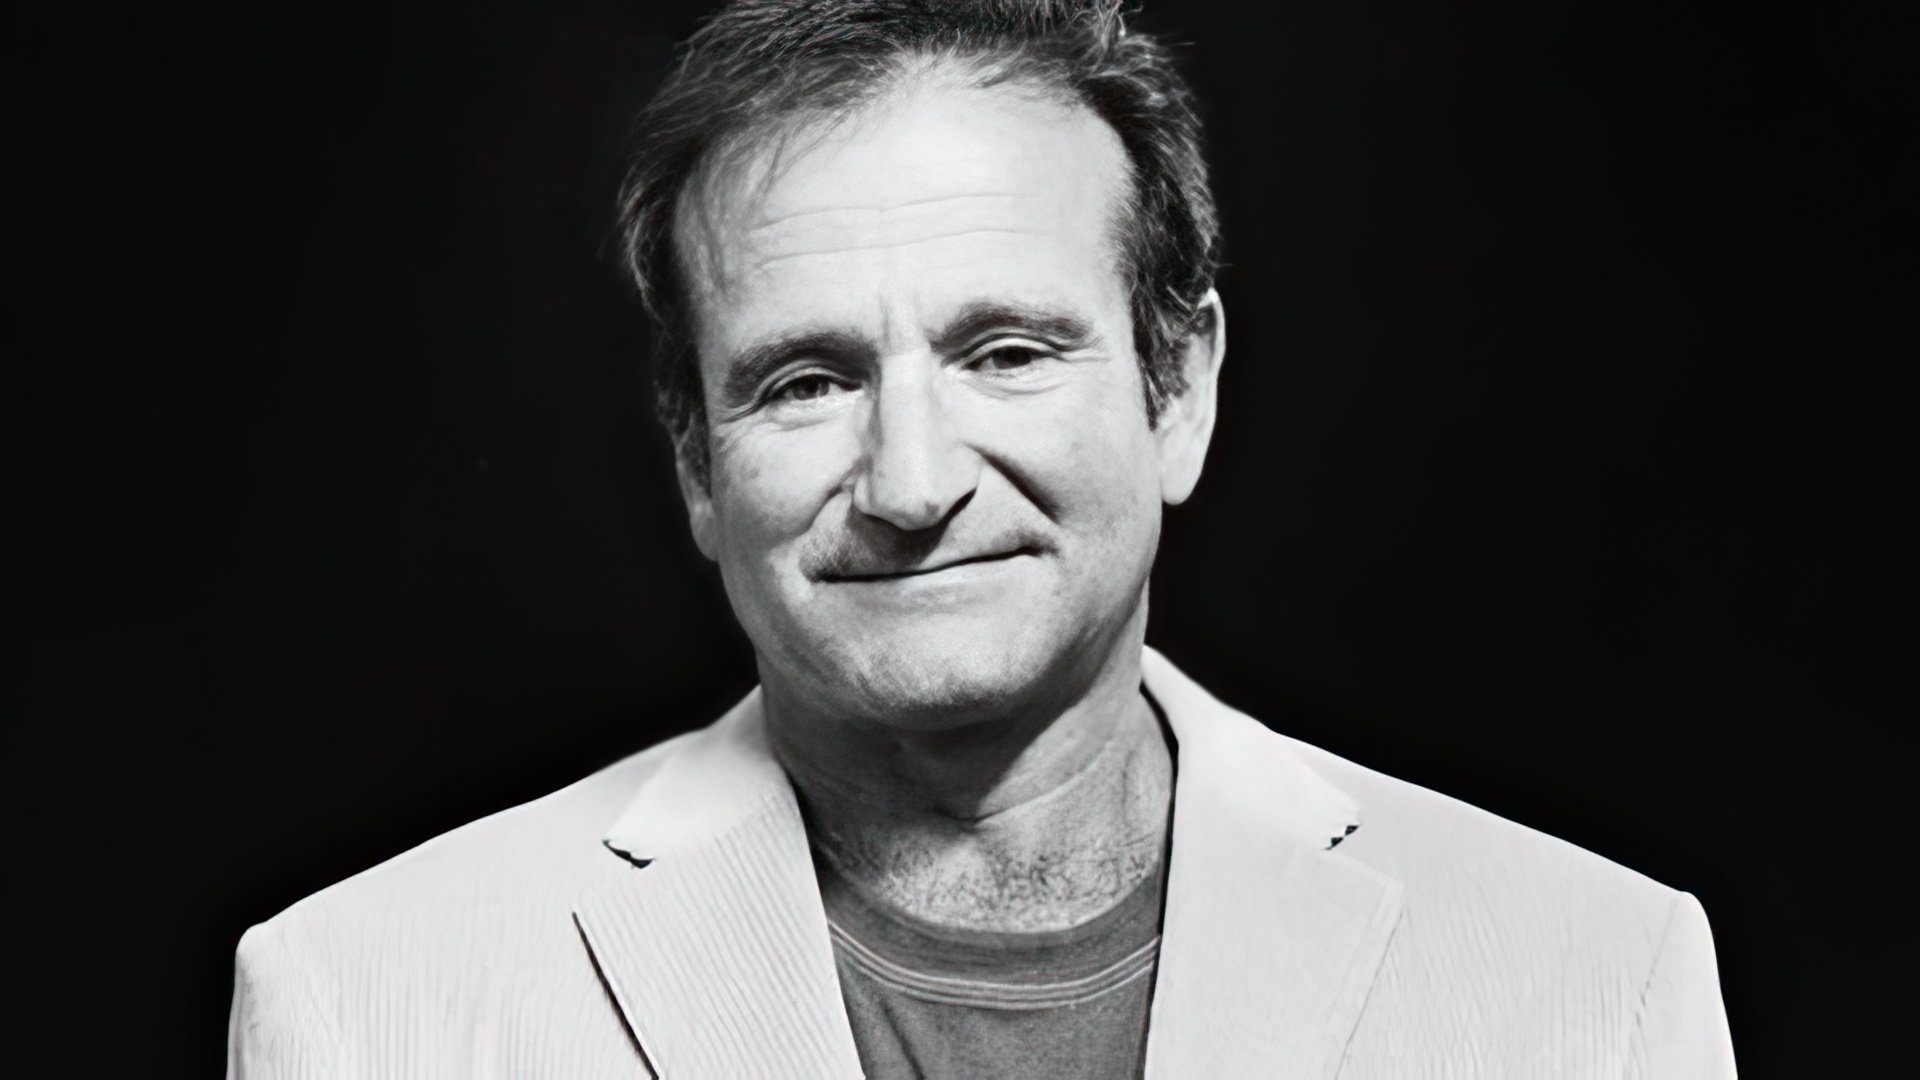 In the photo: Robin Williams